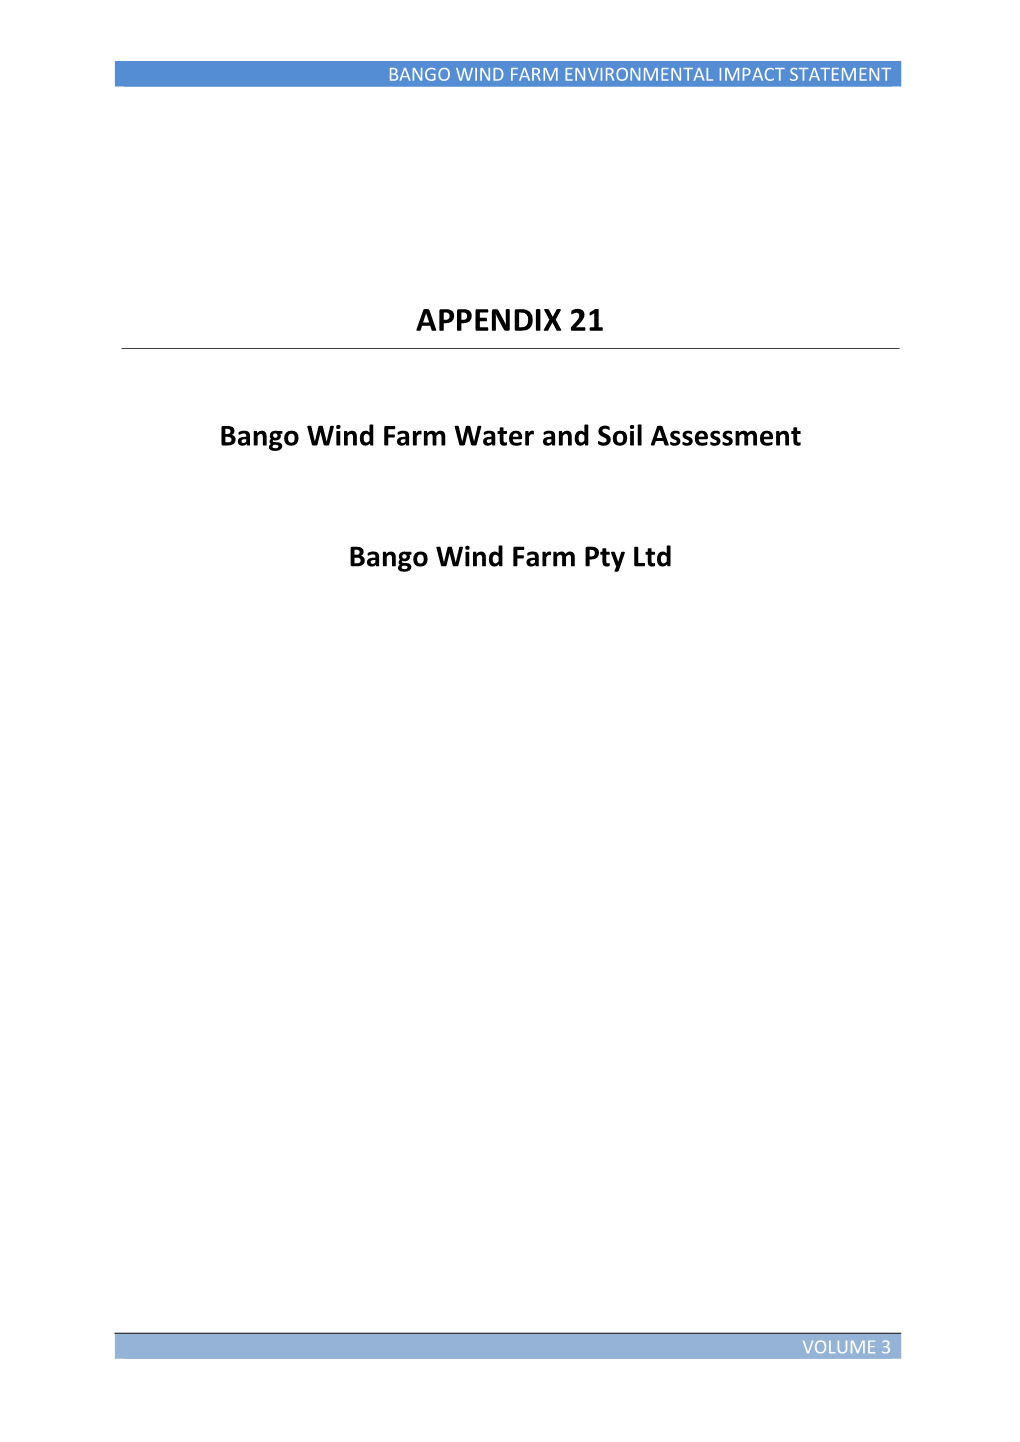 Vol 3 A21 Soil Water Assessment Download